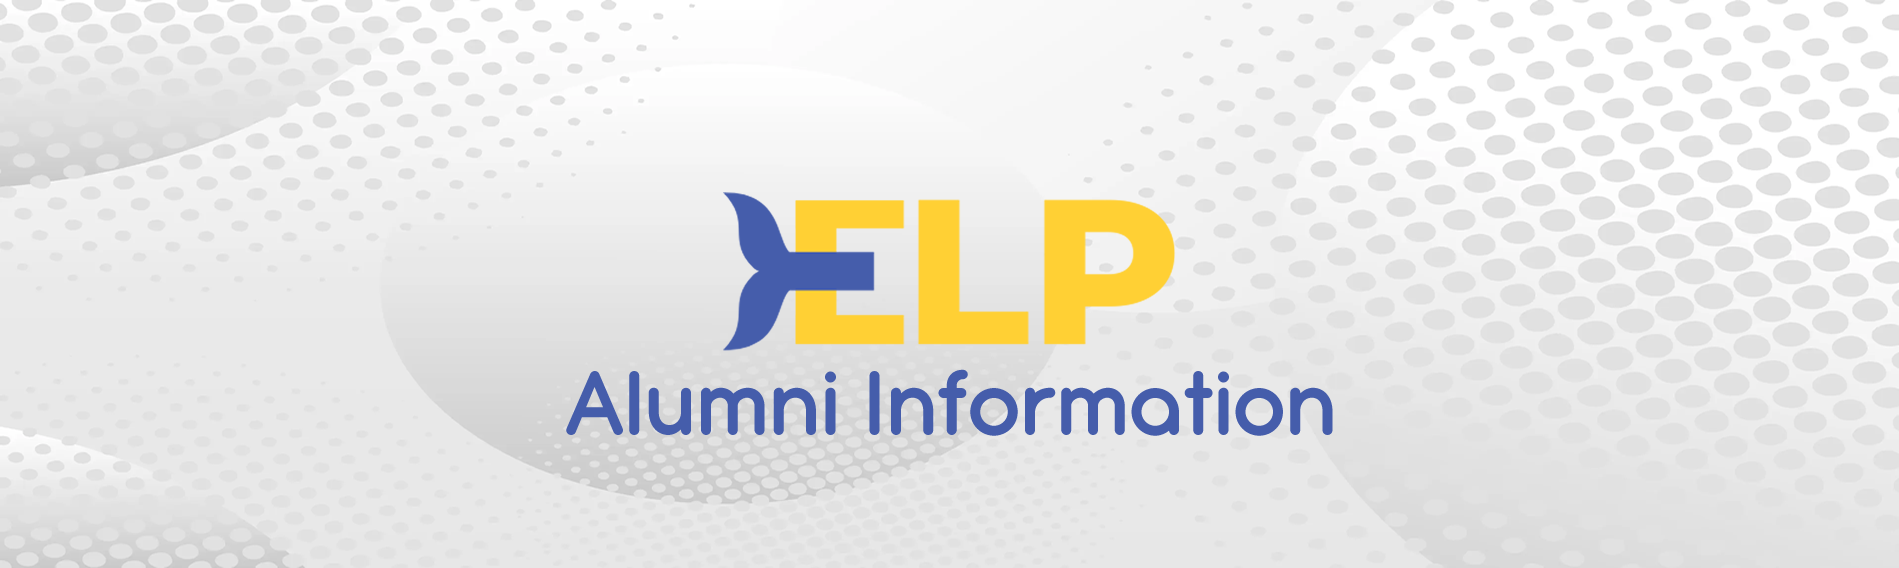 ELP Alumni Information Banner